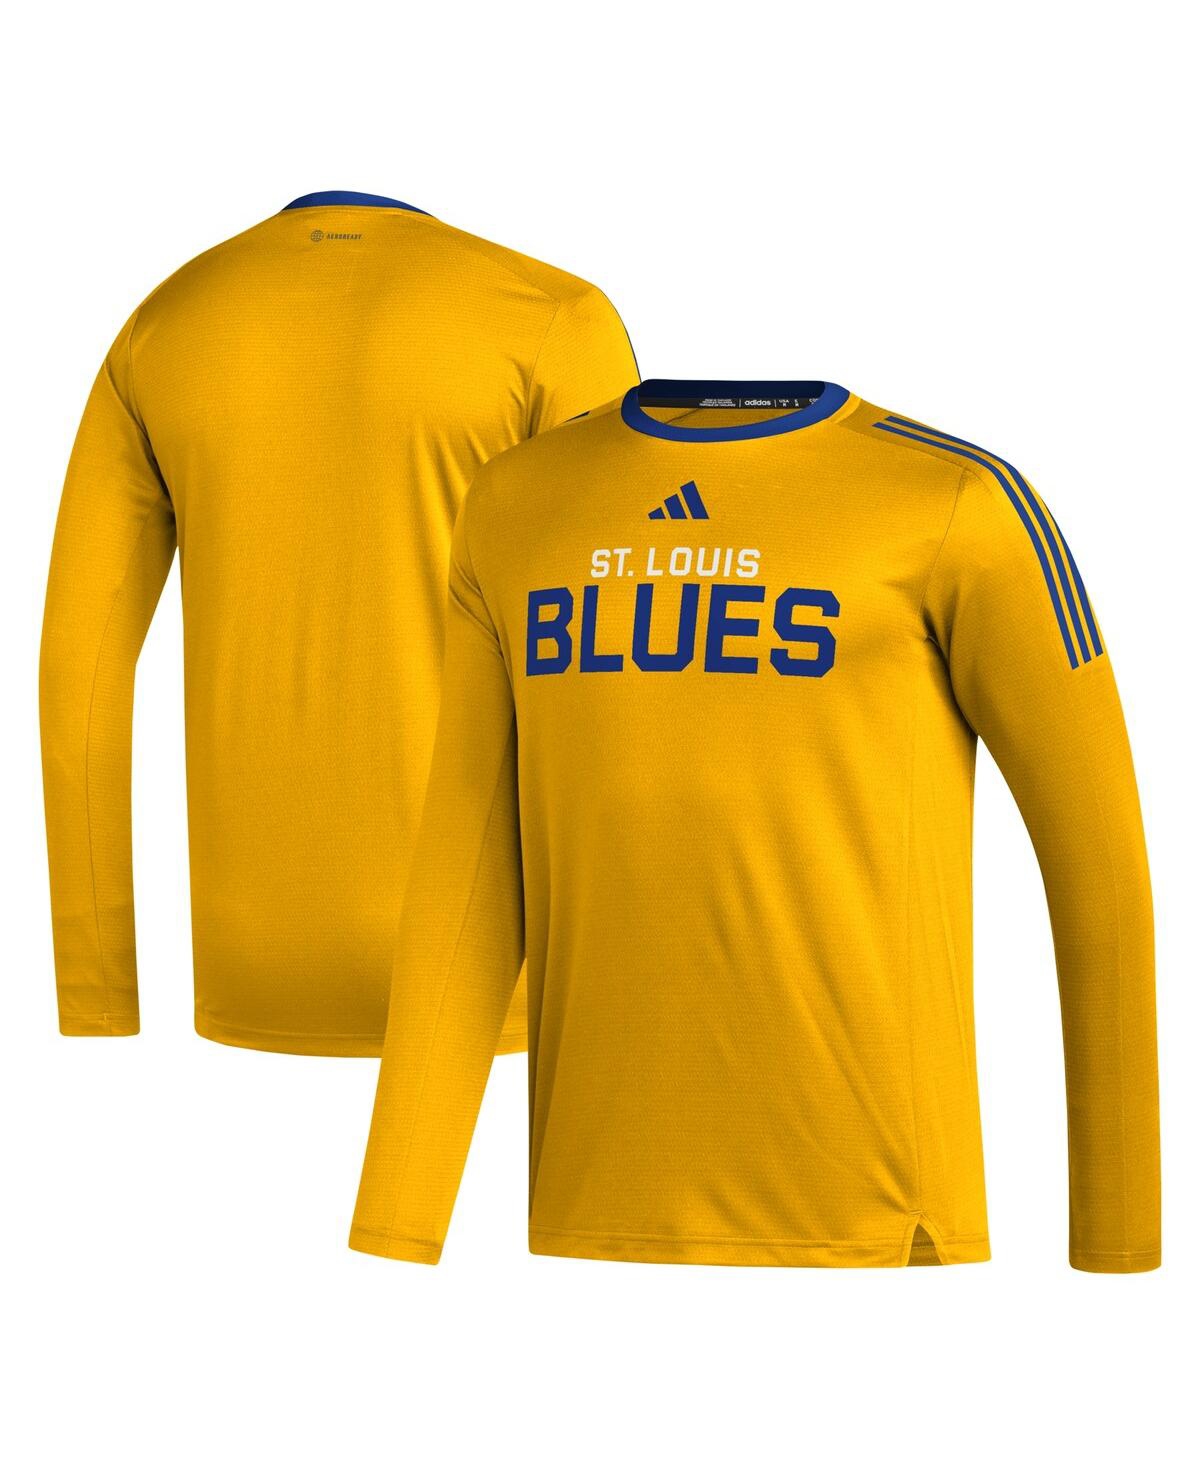 Shop Adidas Originals Men's Adidas Gold St. Louis Blues Aeroready Long Sleeve T-shirt